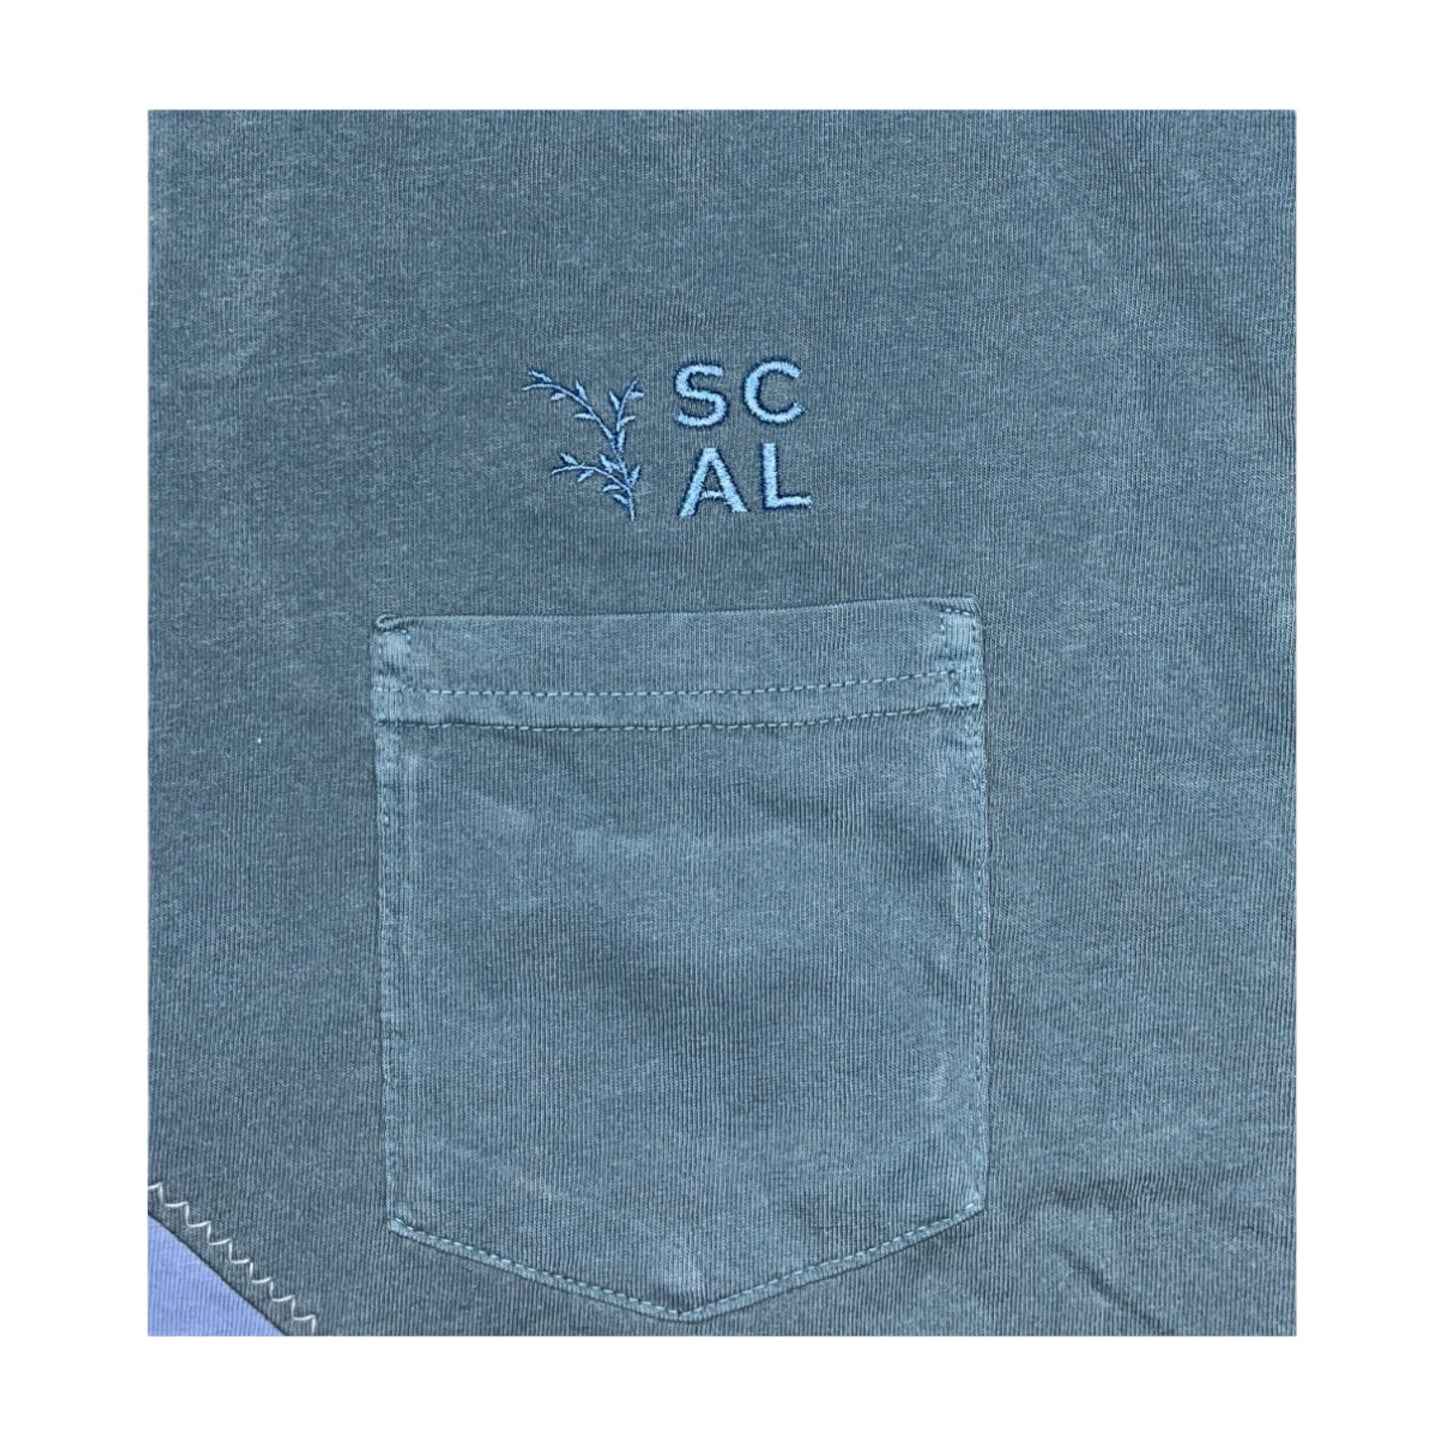 Blue / Ocean LG T-Shirt LG